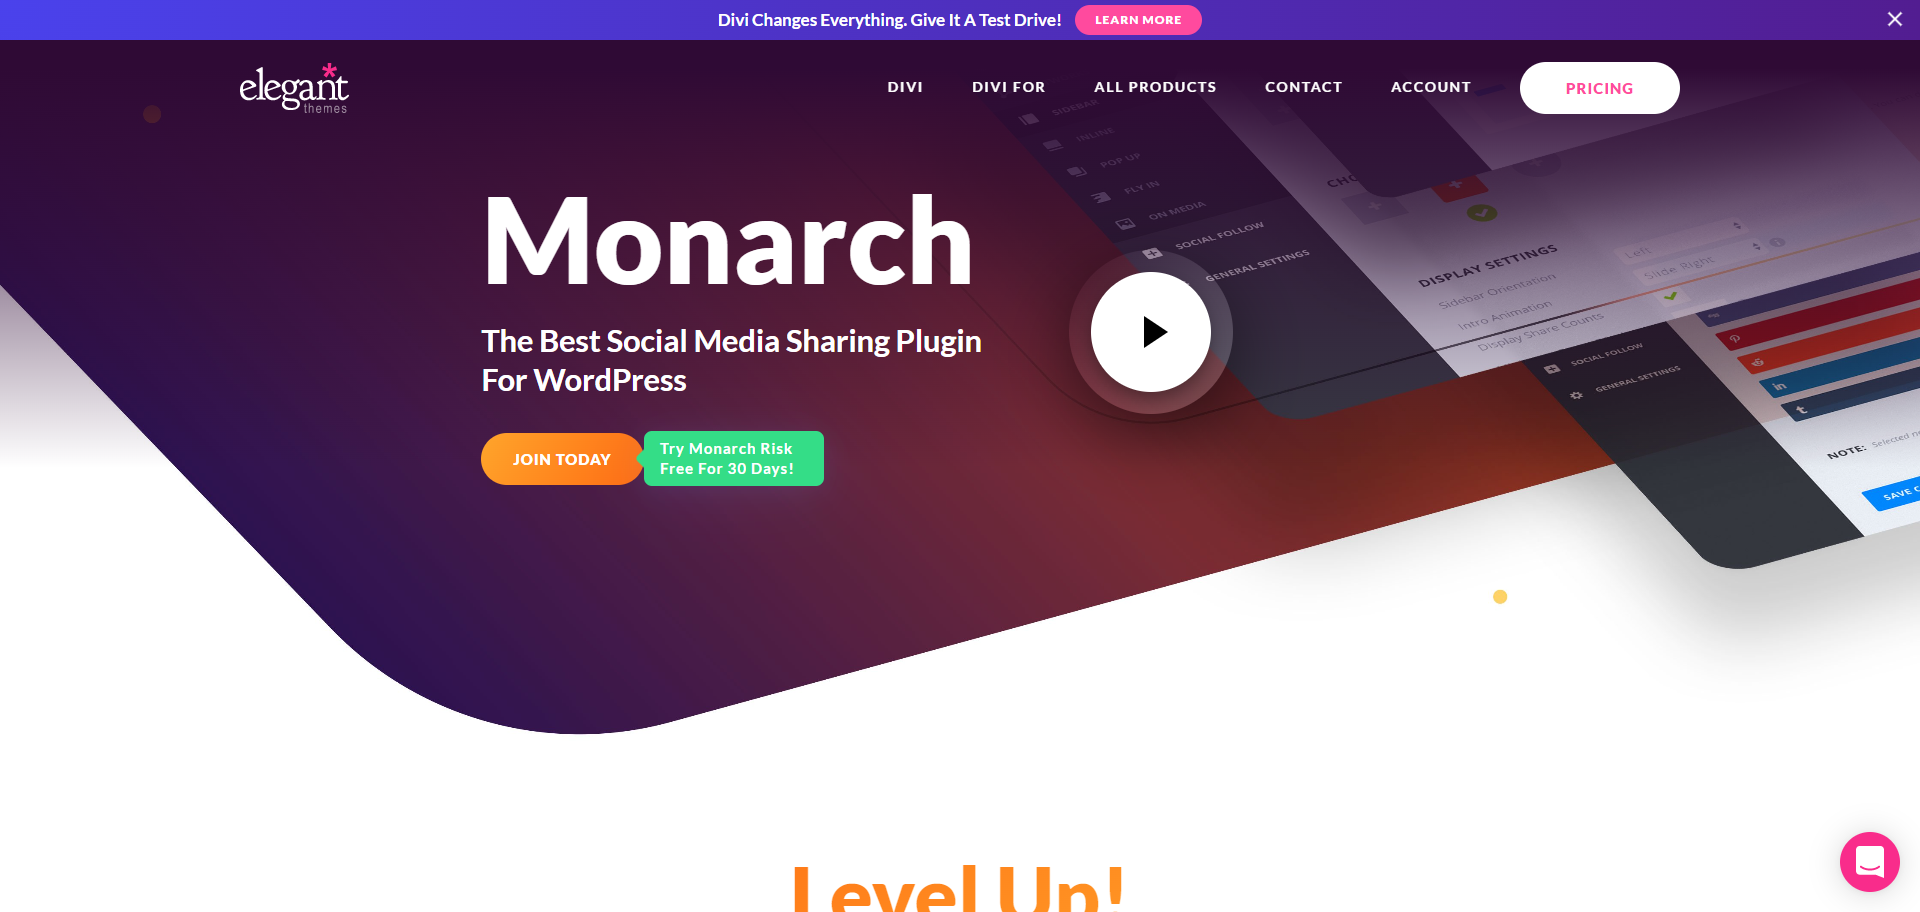 Monarch The Best Social Media Sharing Plugin For WordPress